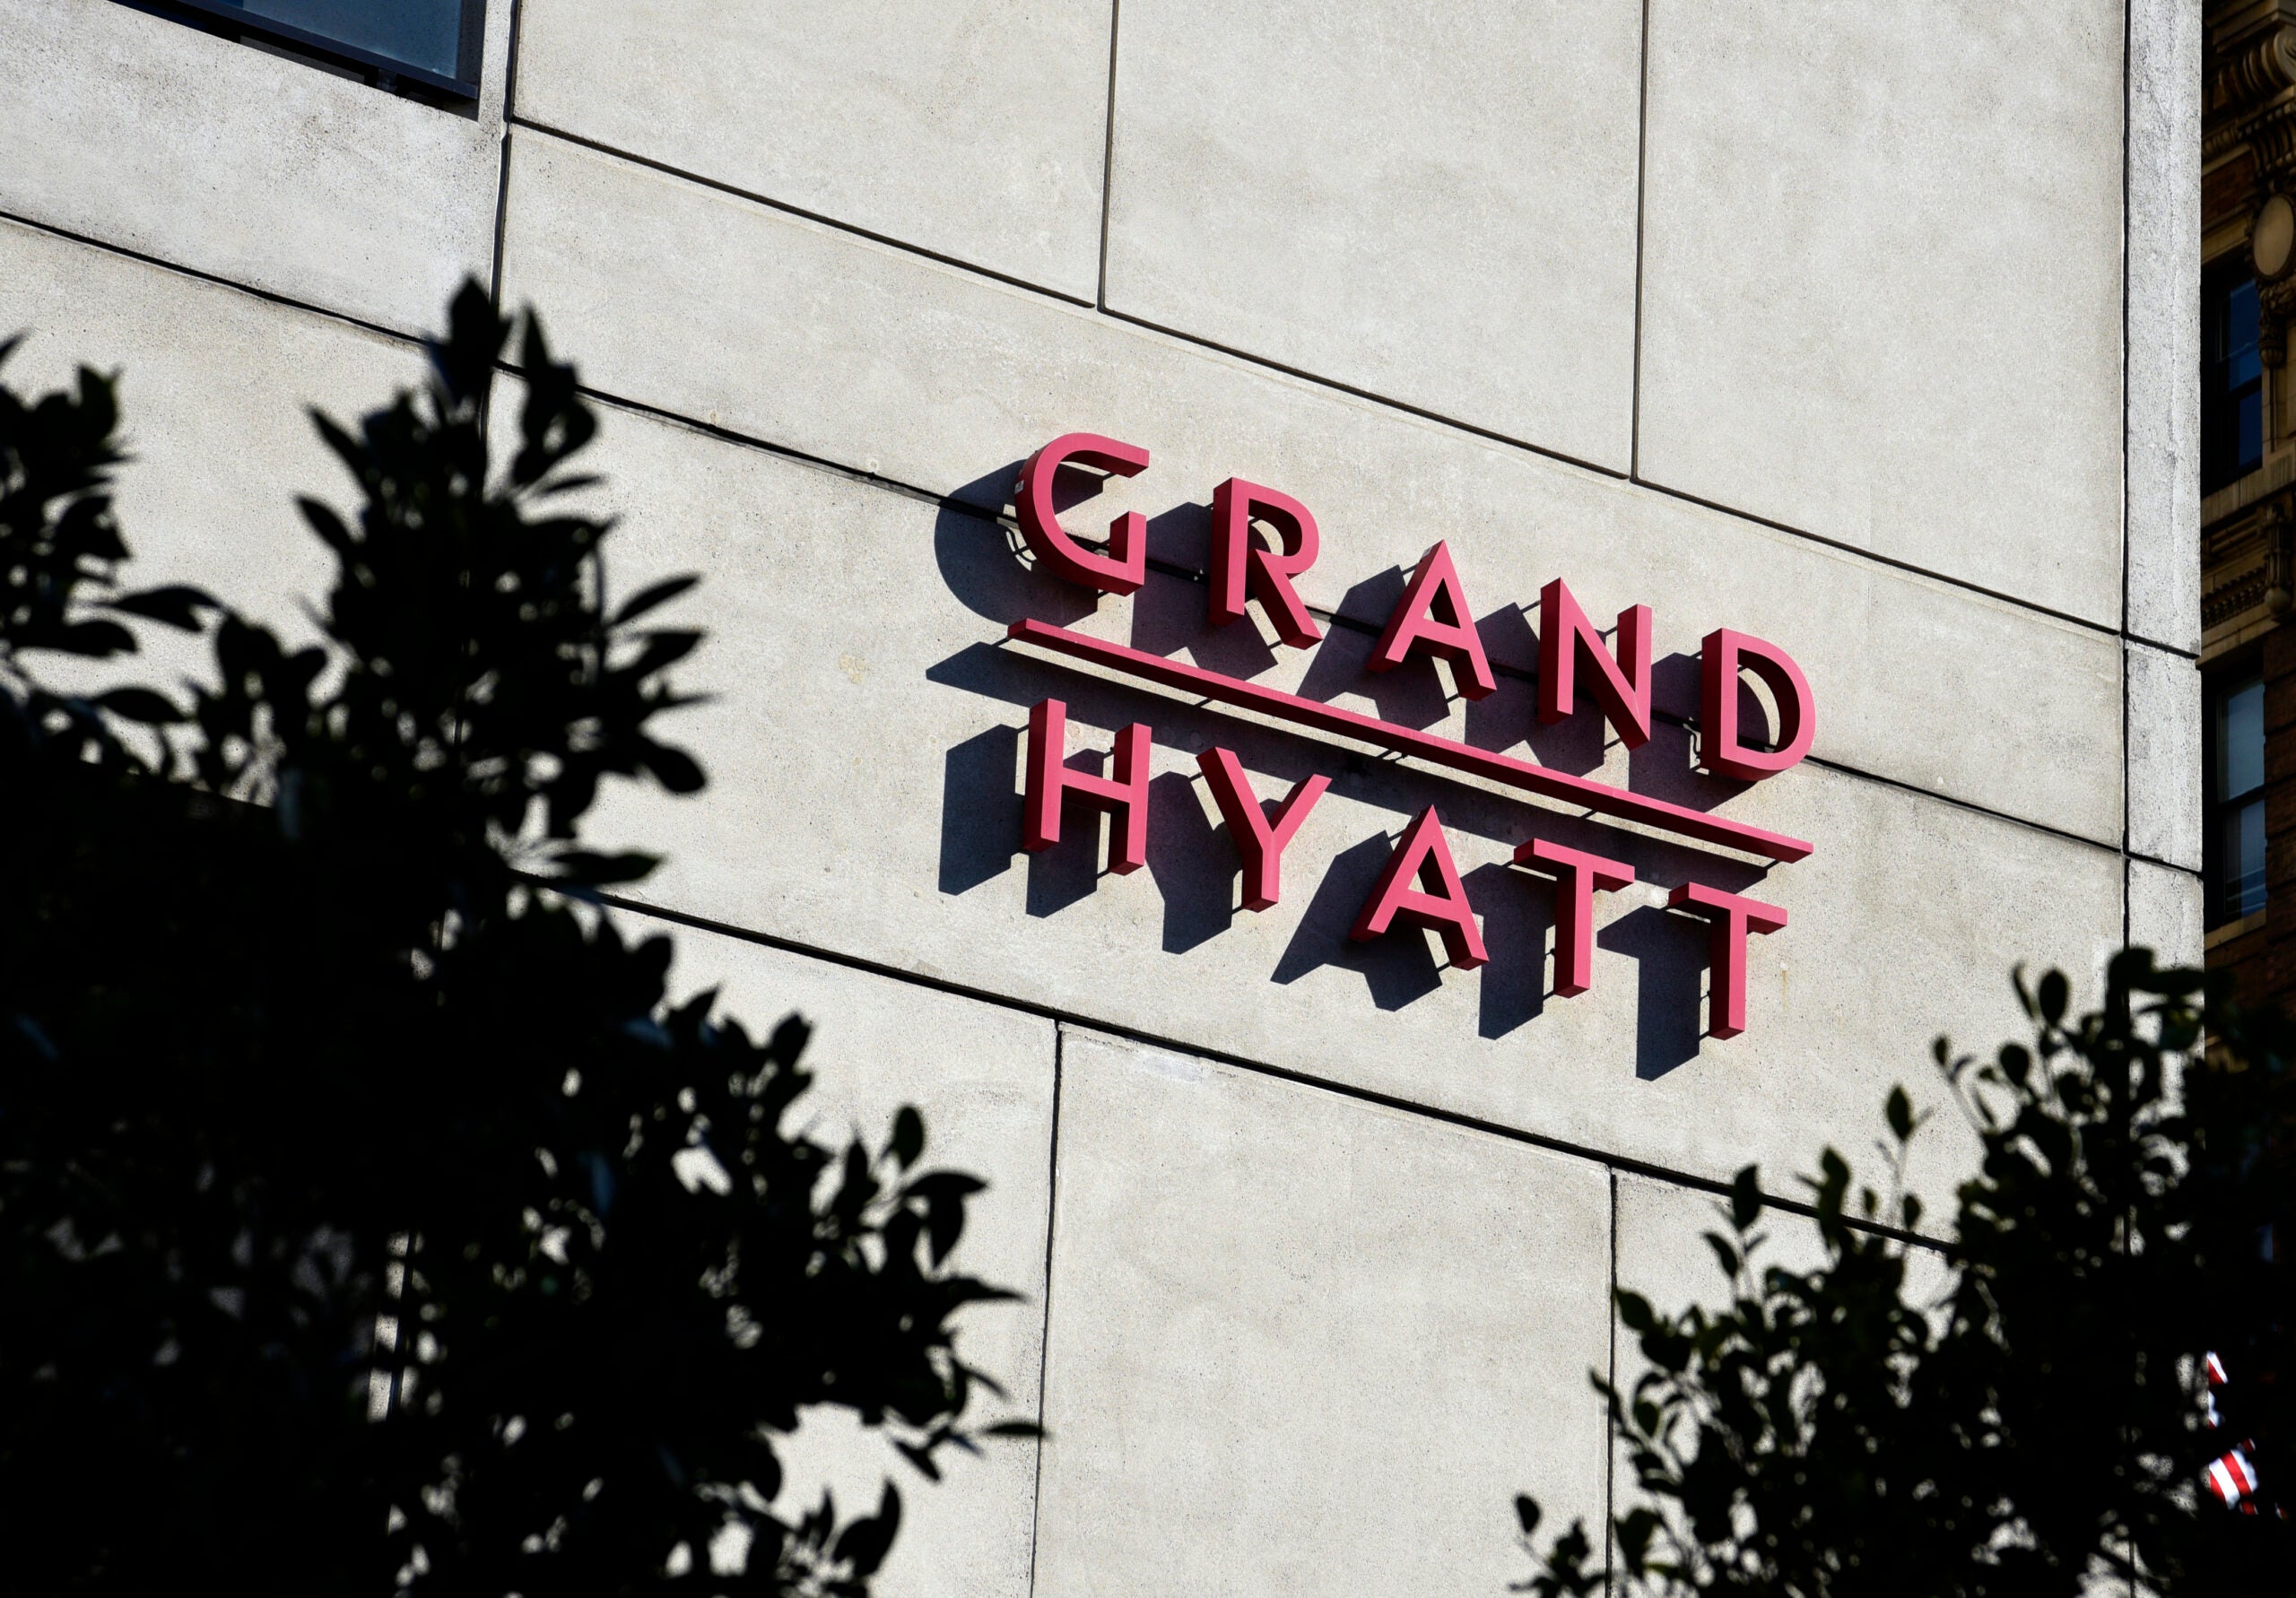 Grand Hyatt sign in San Francisco